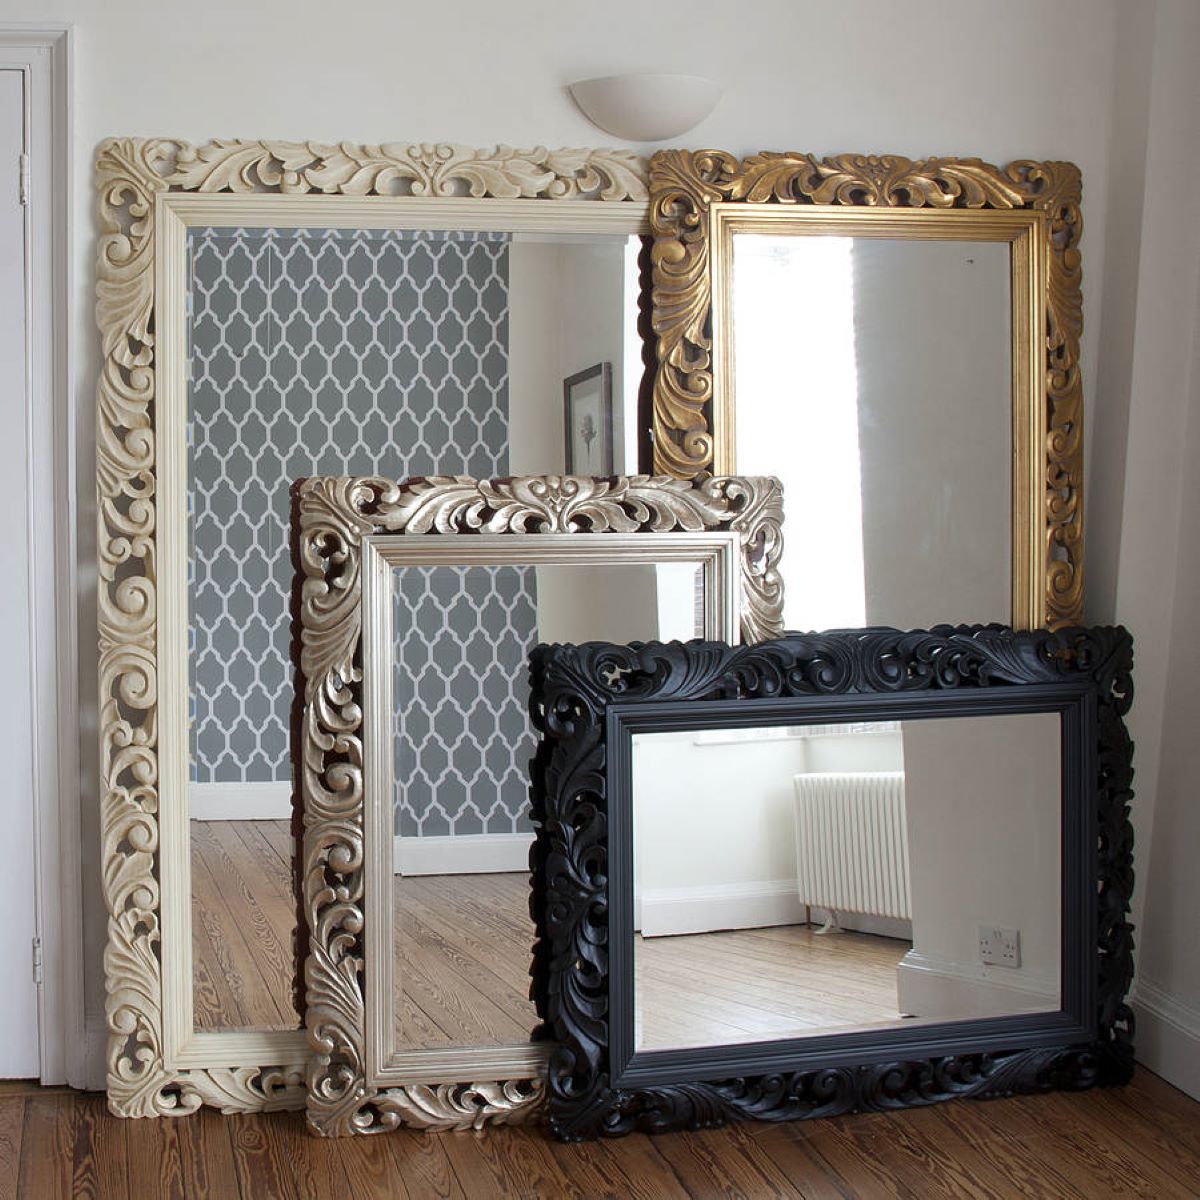 AAZZKANG Wall Mirror Black Wood Framed Mirror Rectangle Decorative Hanging  Mirrors for Bedroom Bathroom Living Room Wall Decor Small